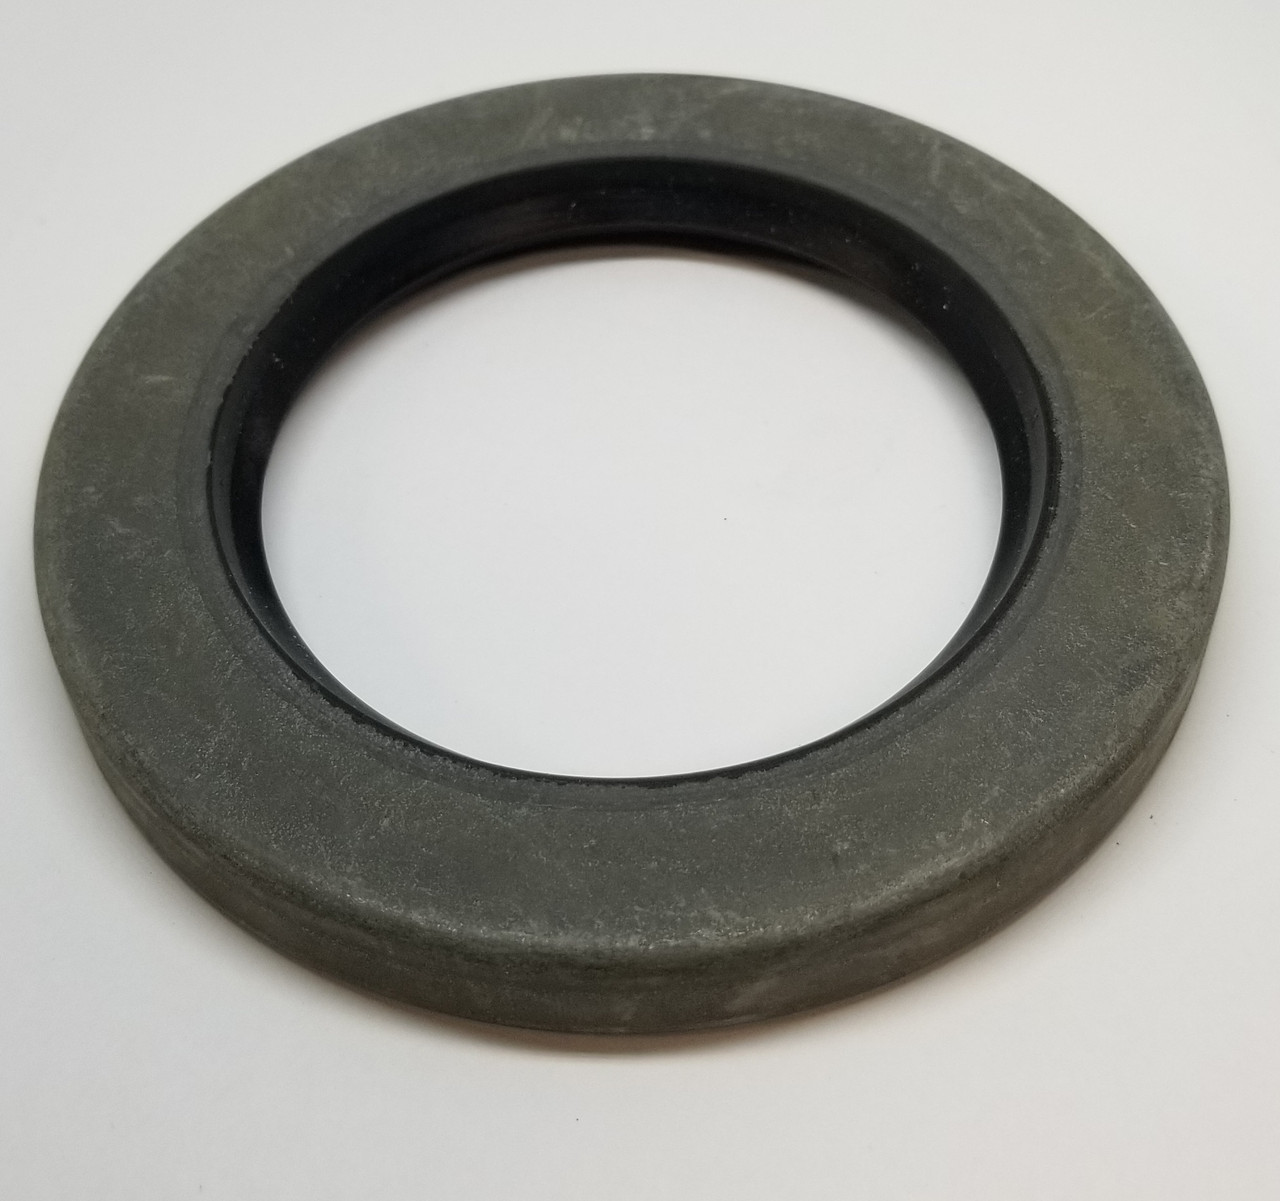 6.750" (171.45mm) Inch Reinforced Metal Single Lip Nitrile Oil Seal  67533 CRWH1 R